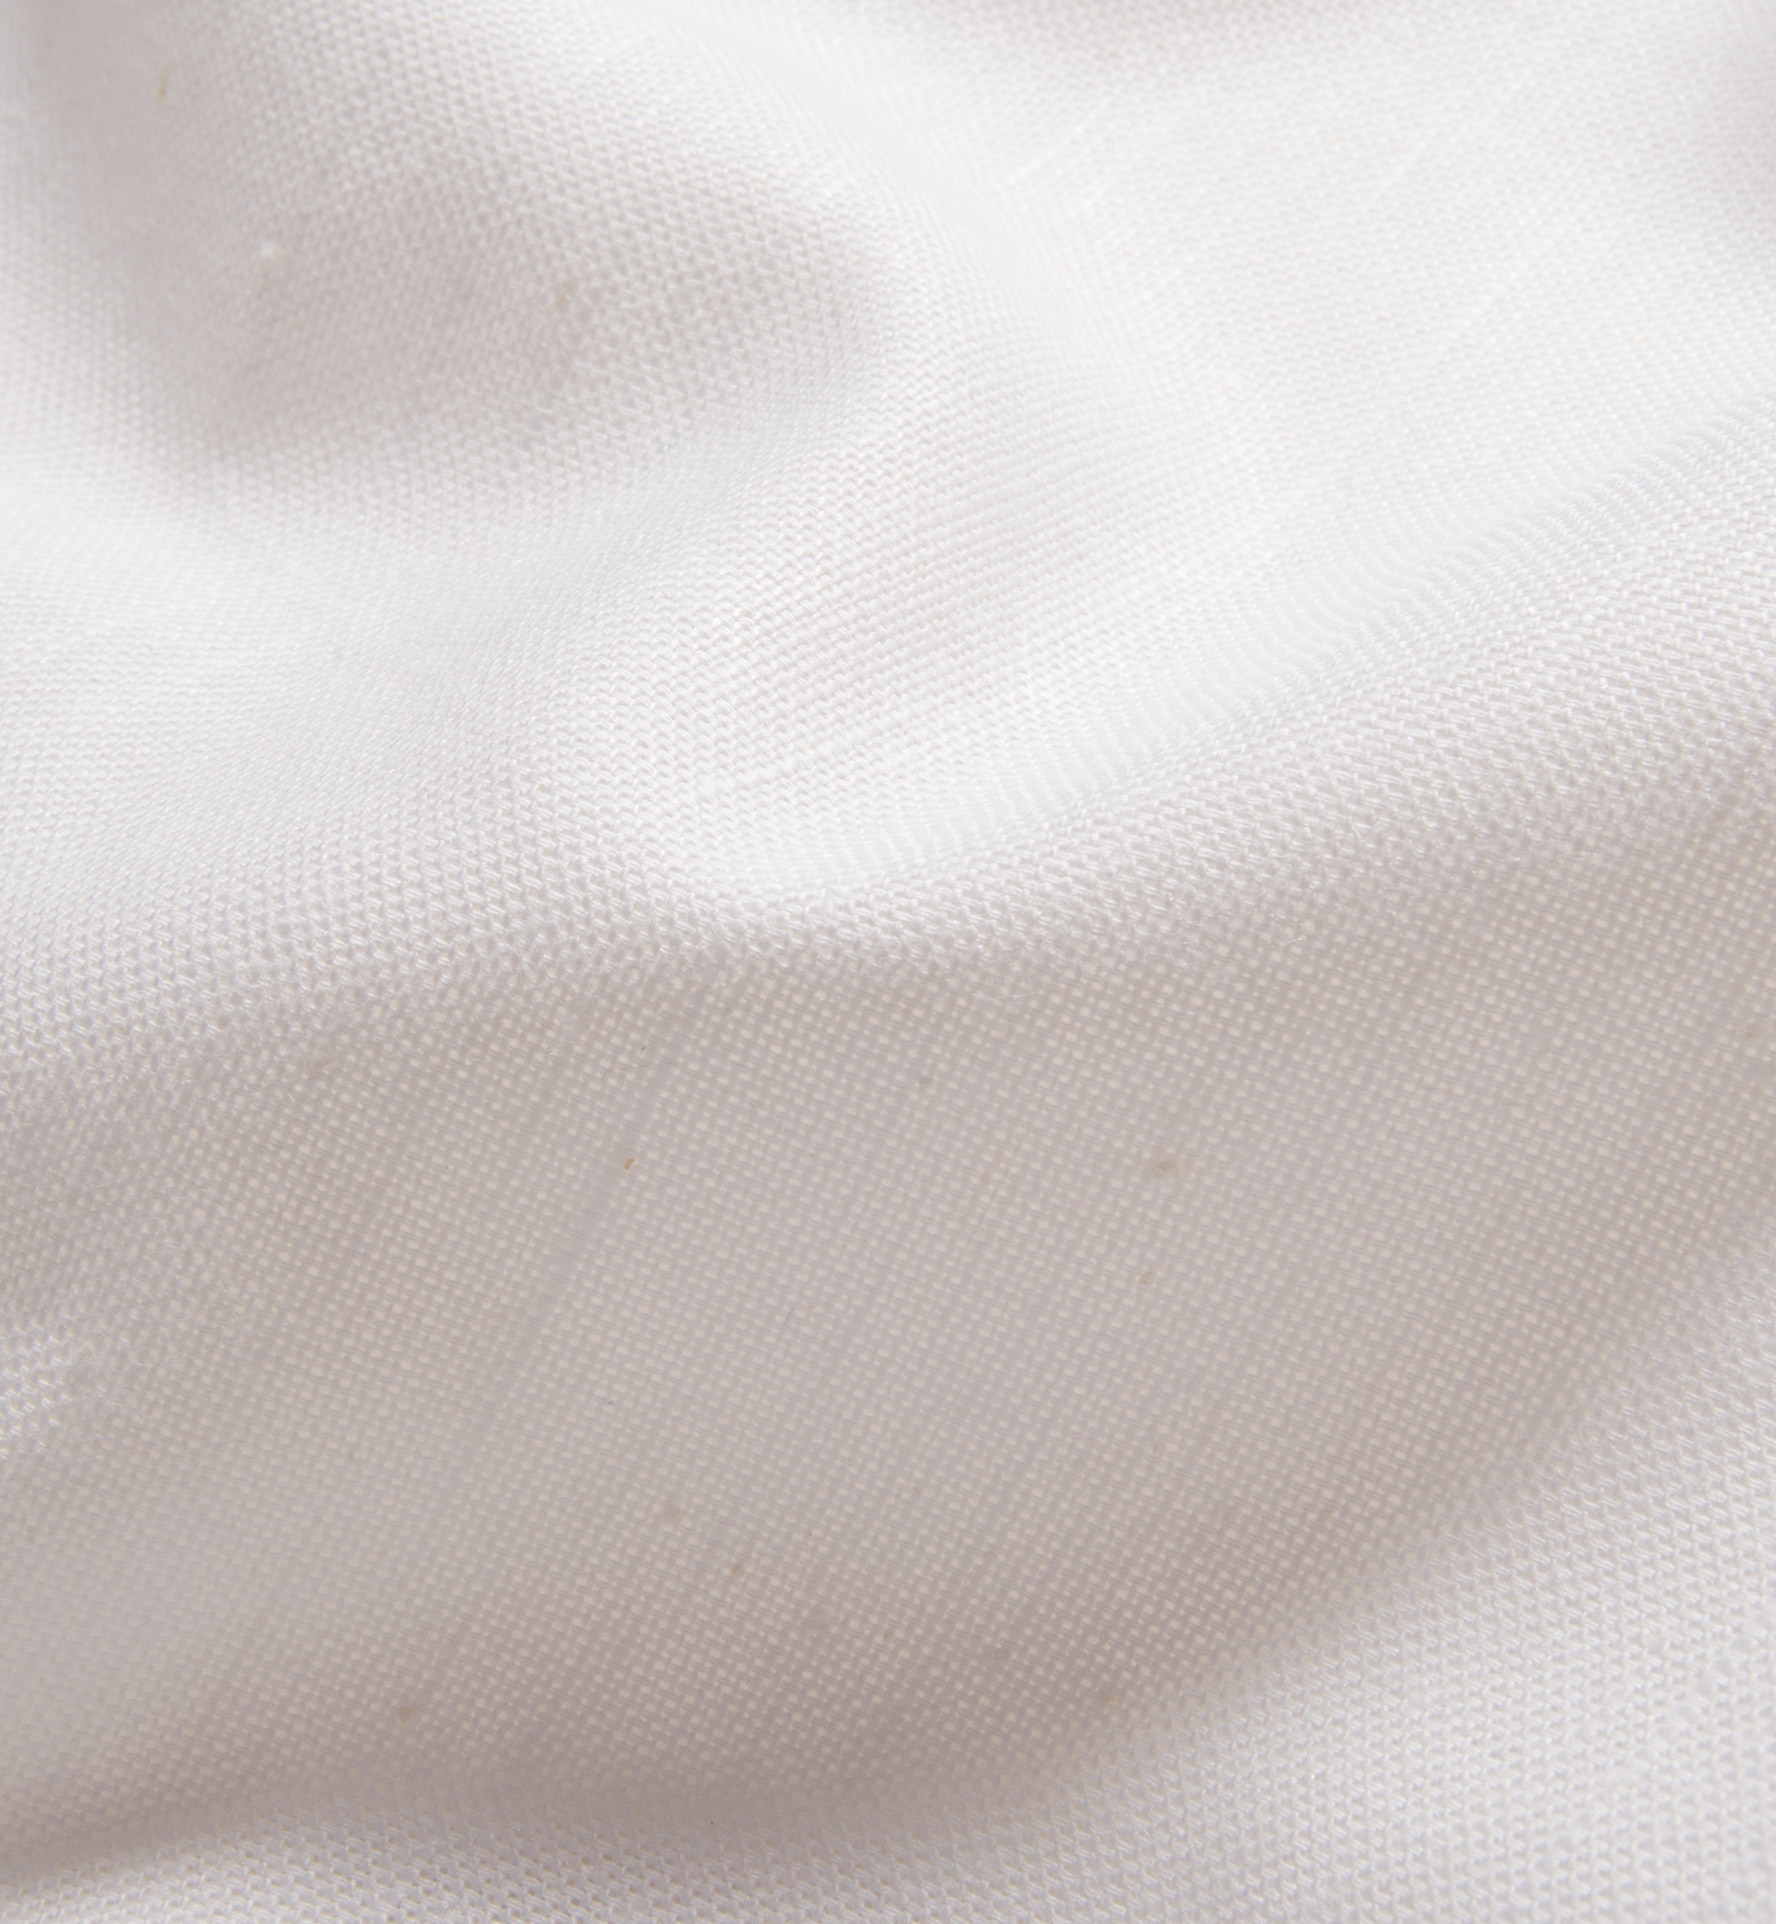 Natural White Cotton Linen Shirts by Proper Cloth